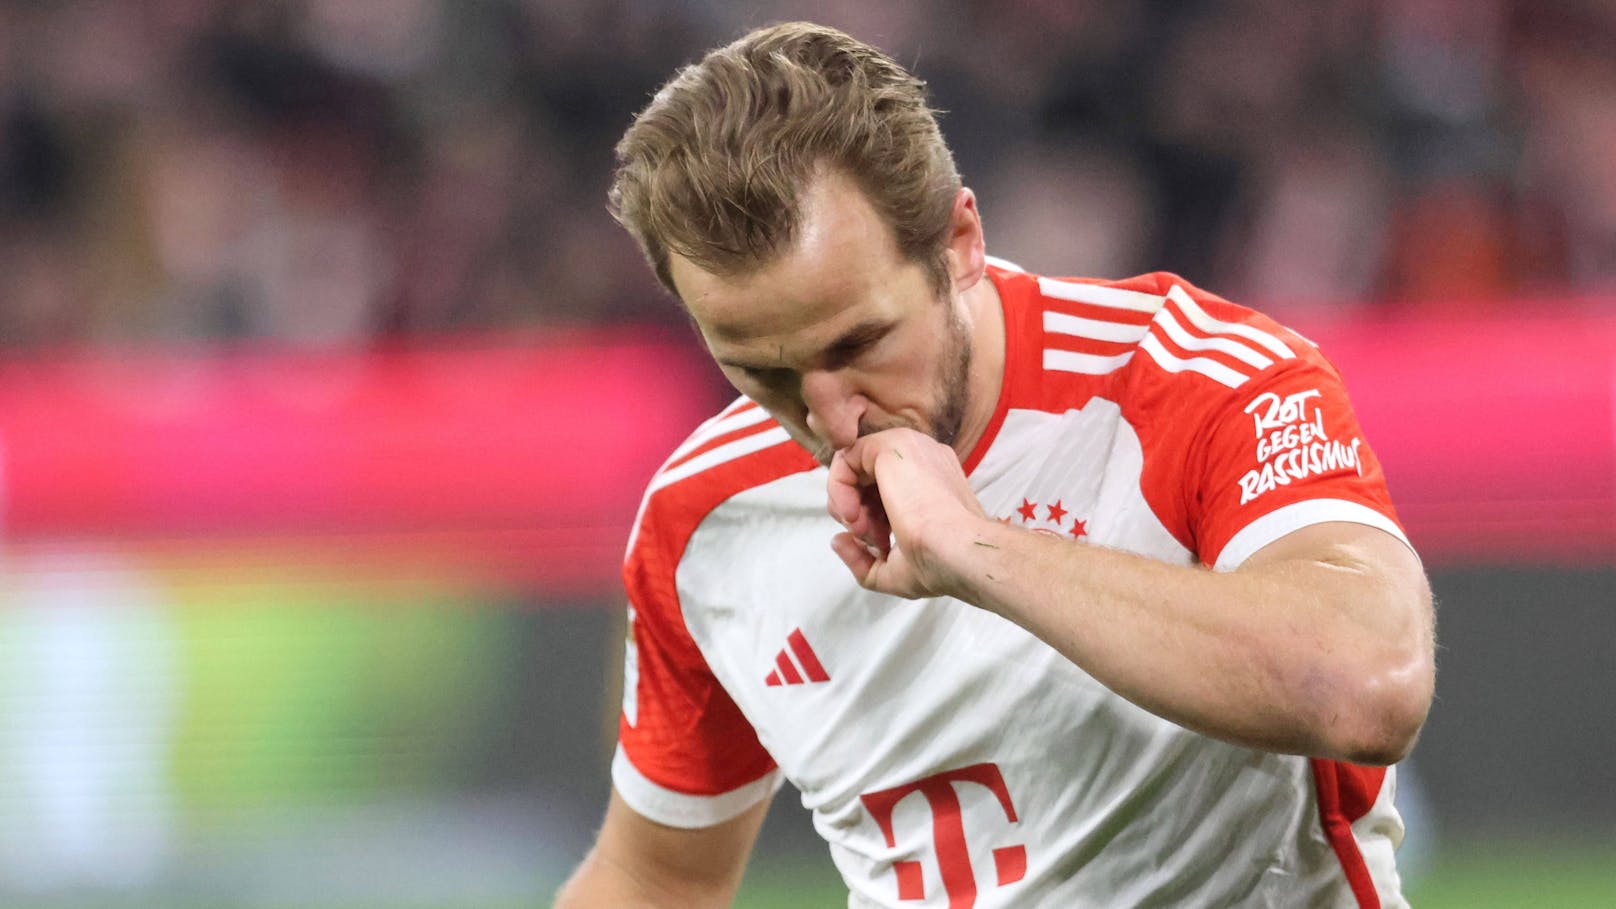 Harte Kritik an Bayern-Star: "Jeder lacht über Kane"